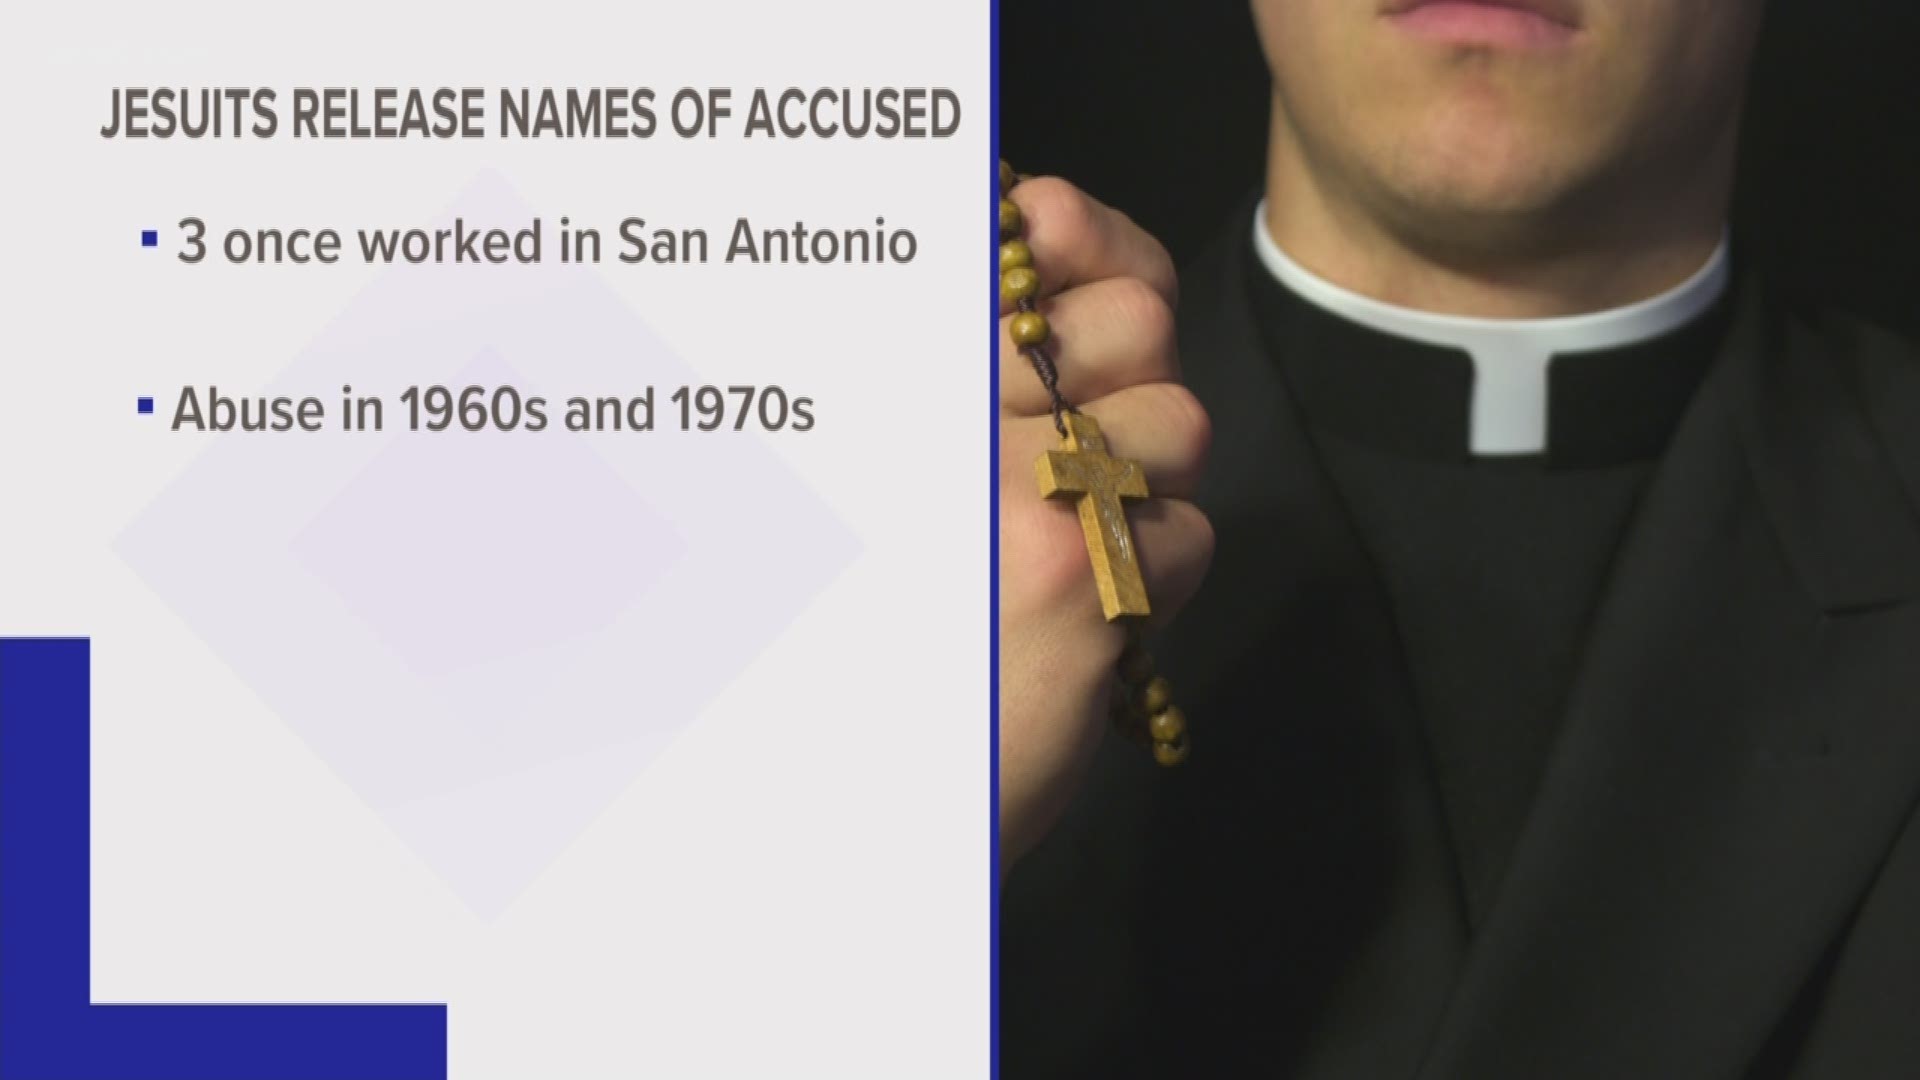 Three former San Antonio Catholic priests are accused of sexually abusing children.